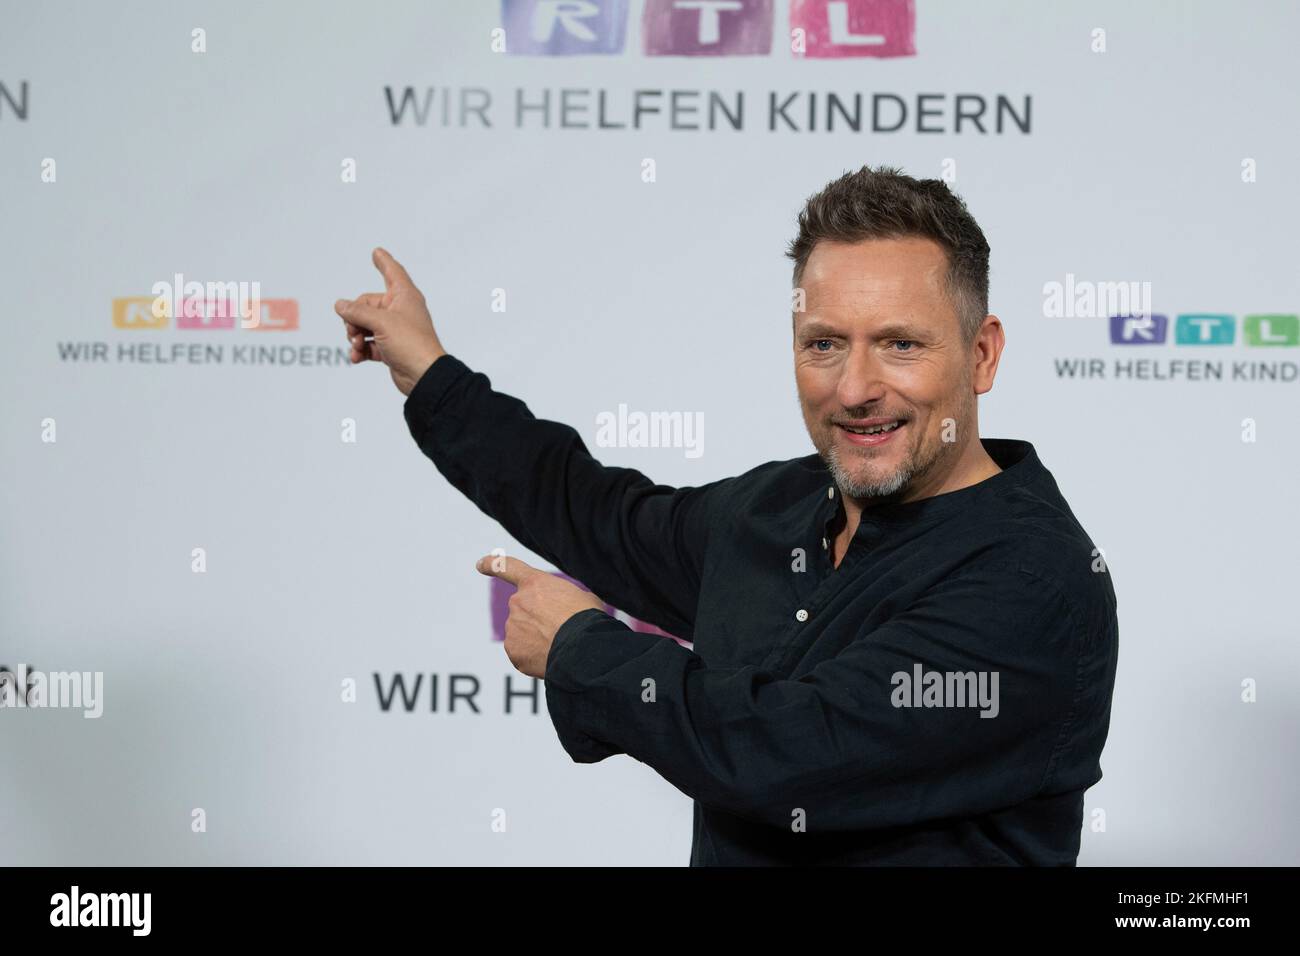 Lars PAPE, actor, 27th RTL donation marathon "We help children", television, November 17-18, 2022. Stock Photo